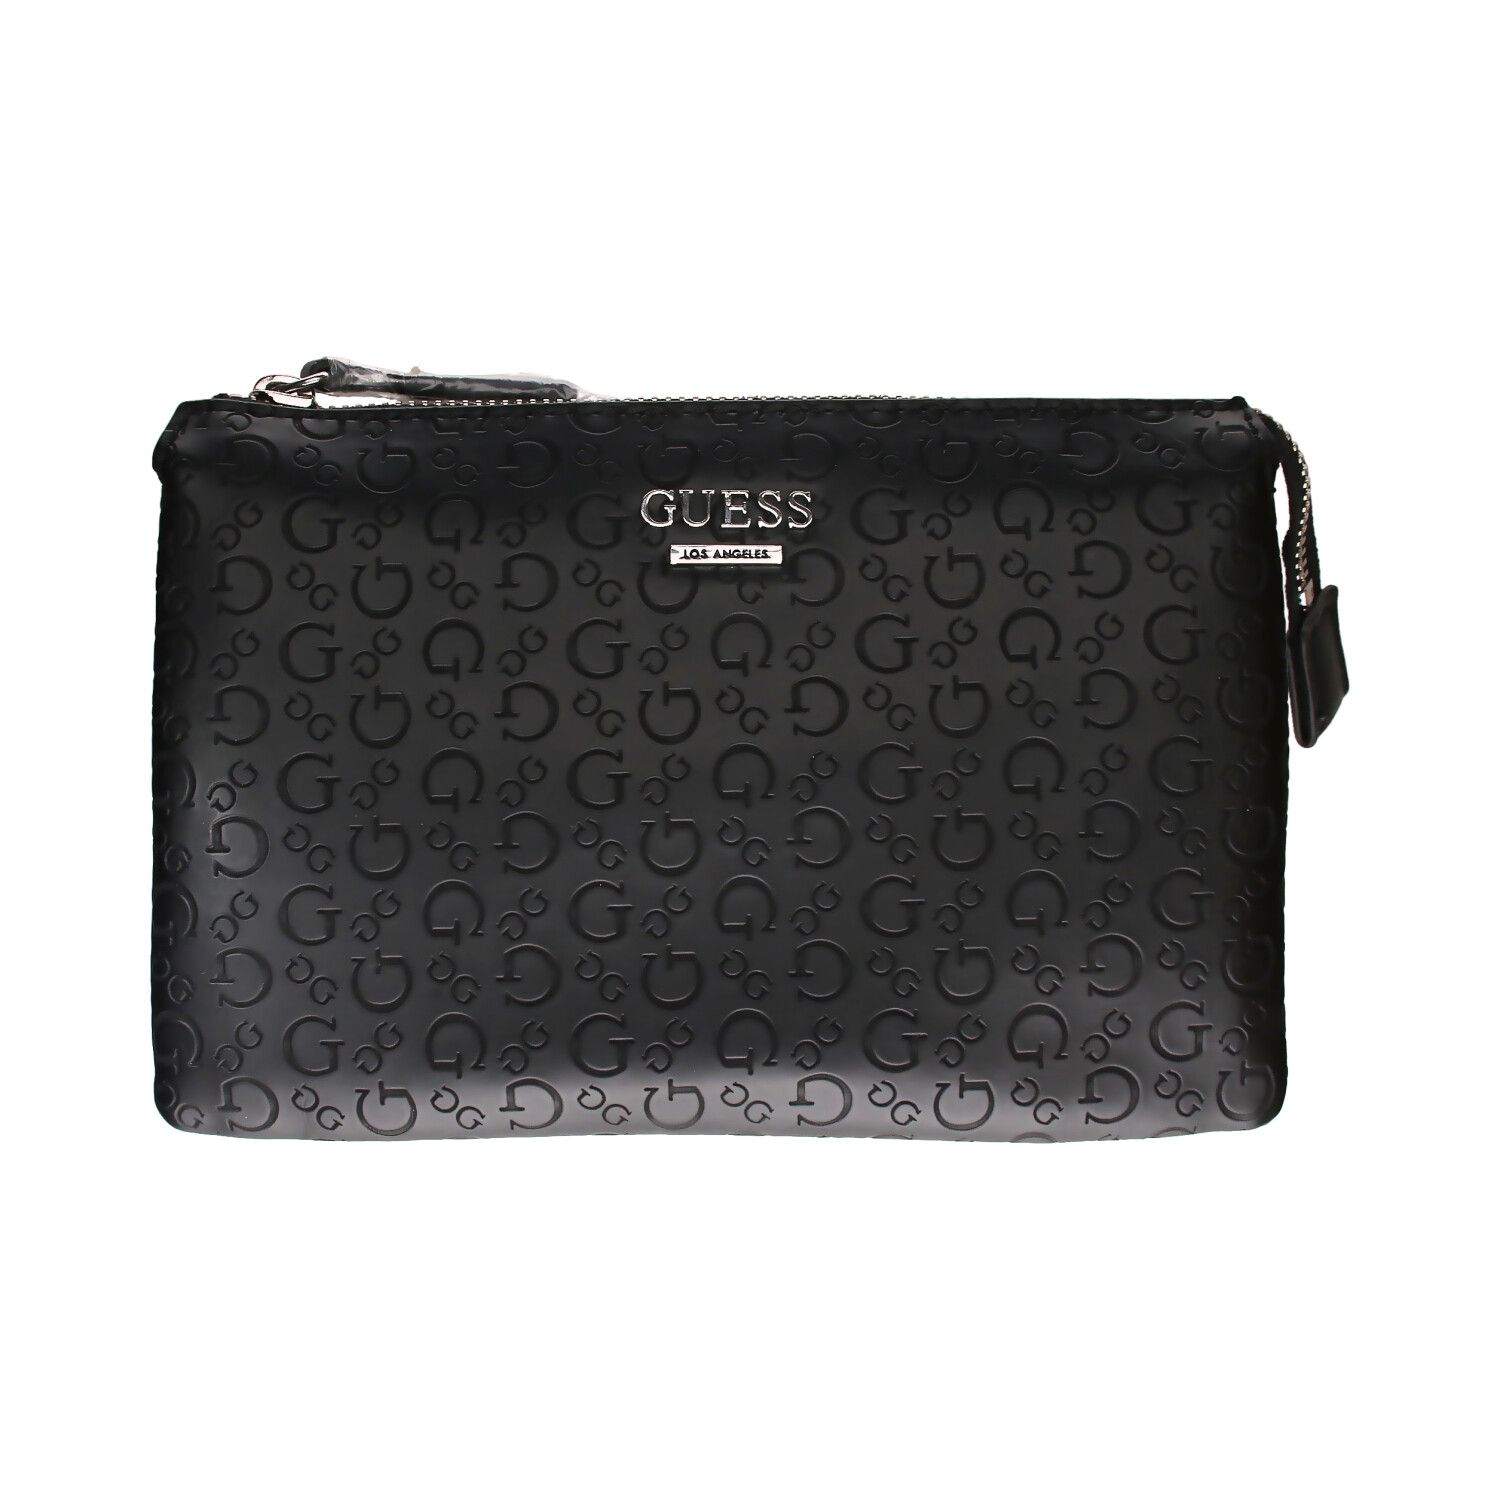 Buy A.K LEATHER Women Genuine Leather Handbags Tote Office Shoulder Bag  Medium Satchel Purse (BLACK) at Amazon.in